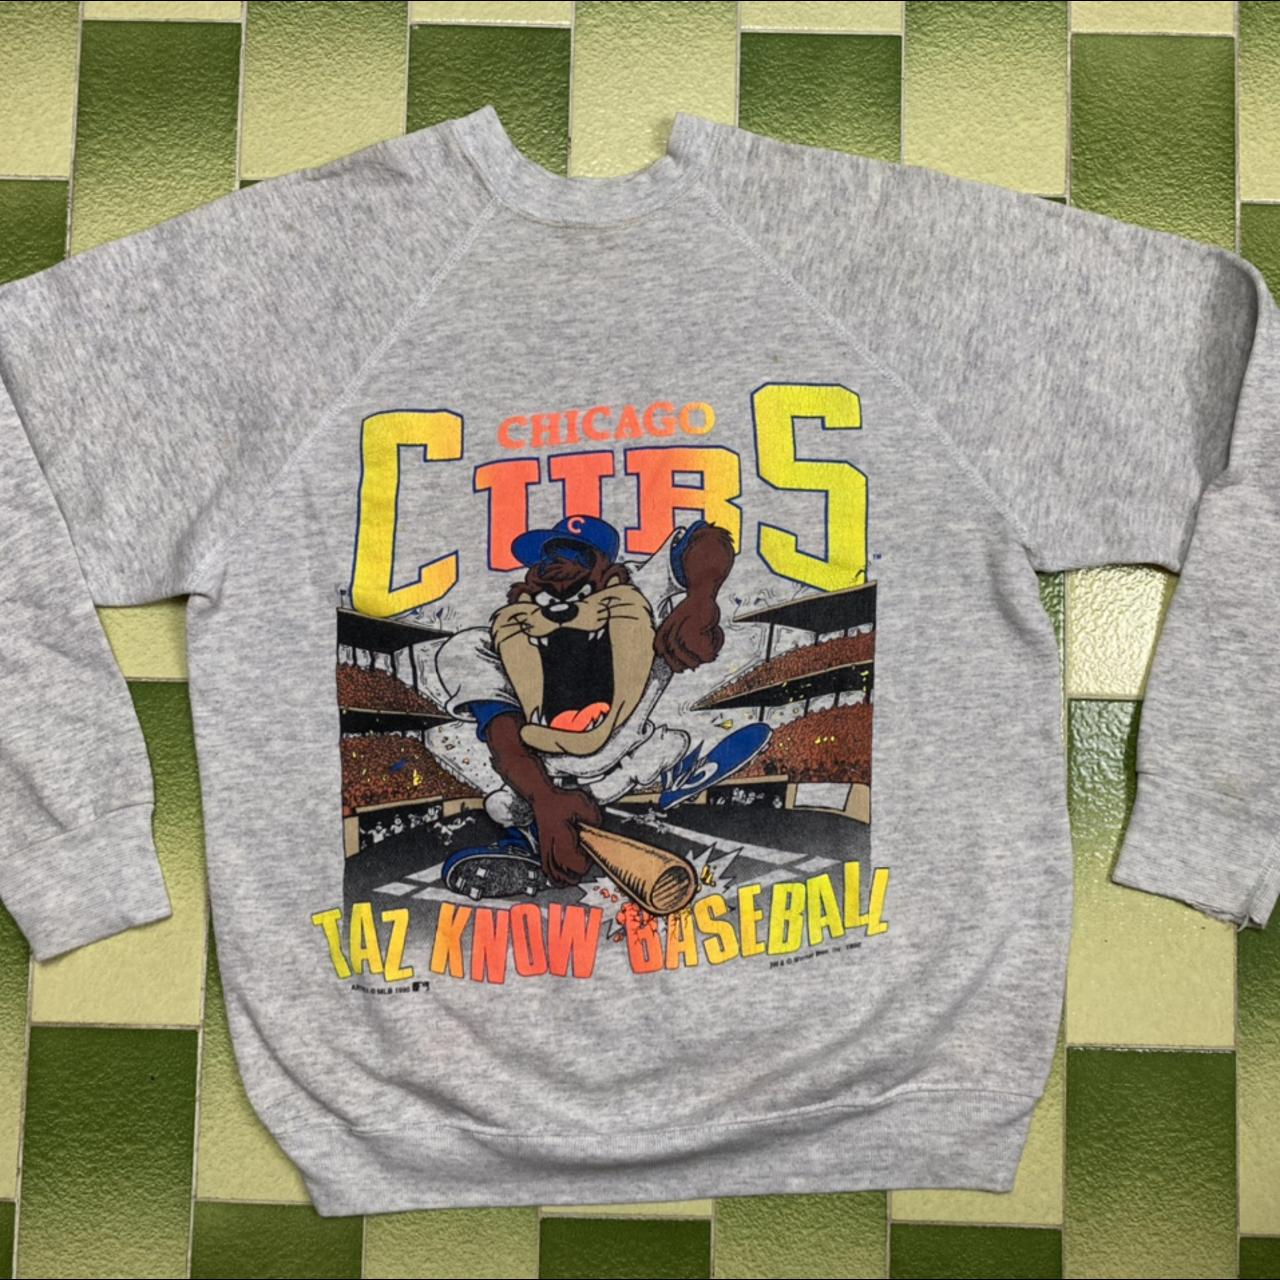 Vintage MLB 1990 Taz Chicago Cubs Sweatshirt - Depop